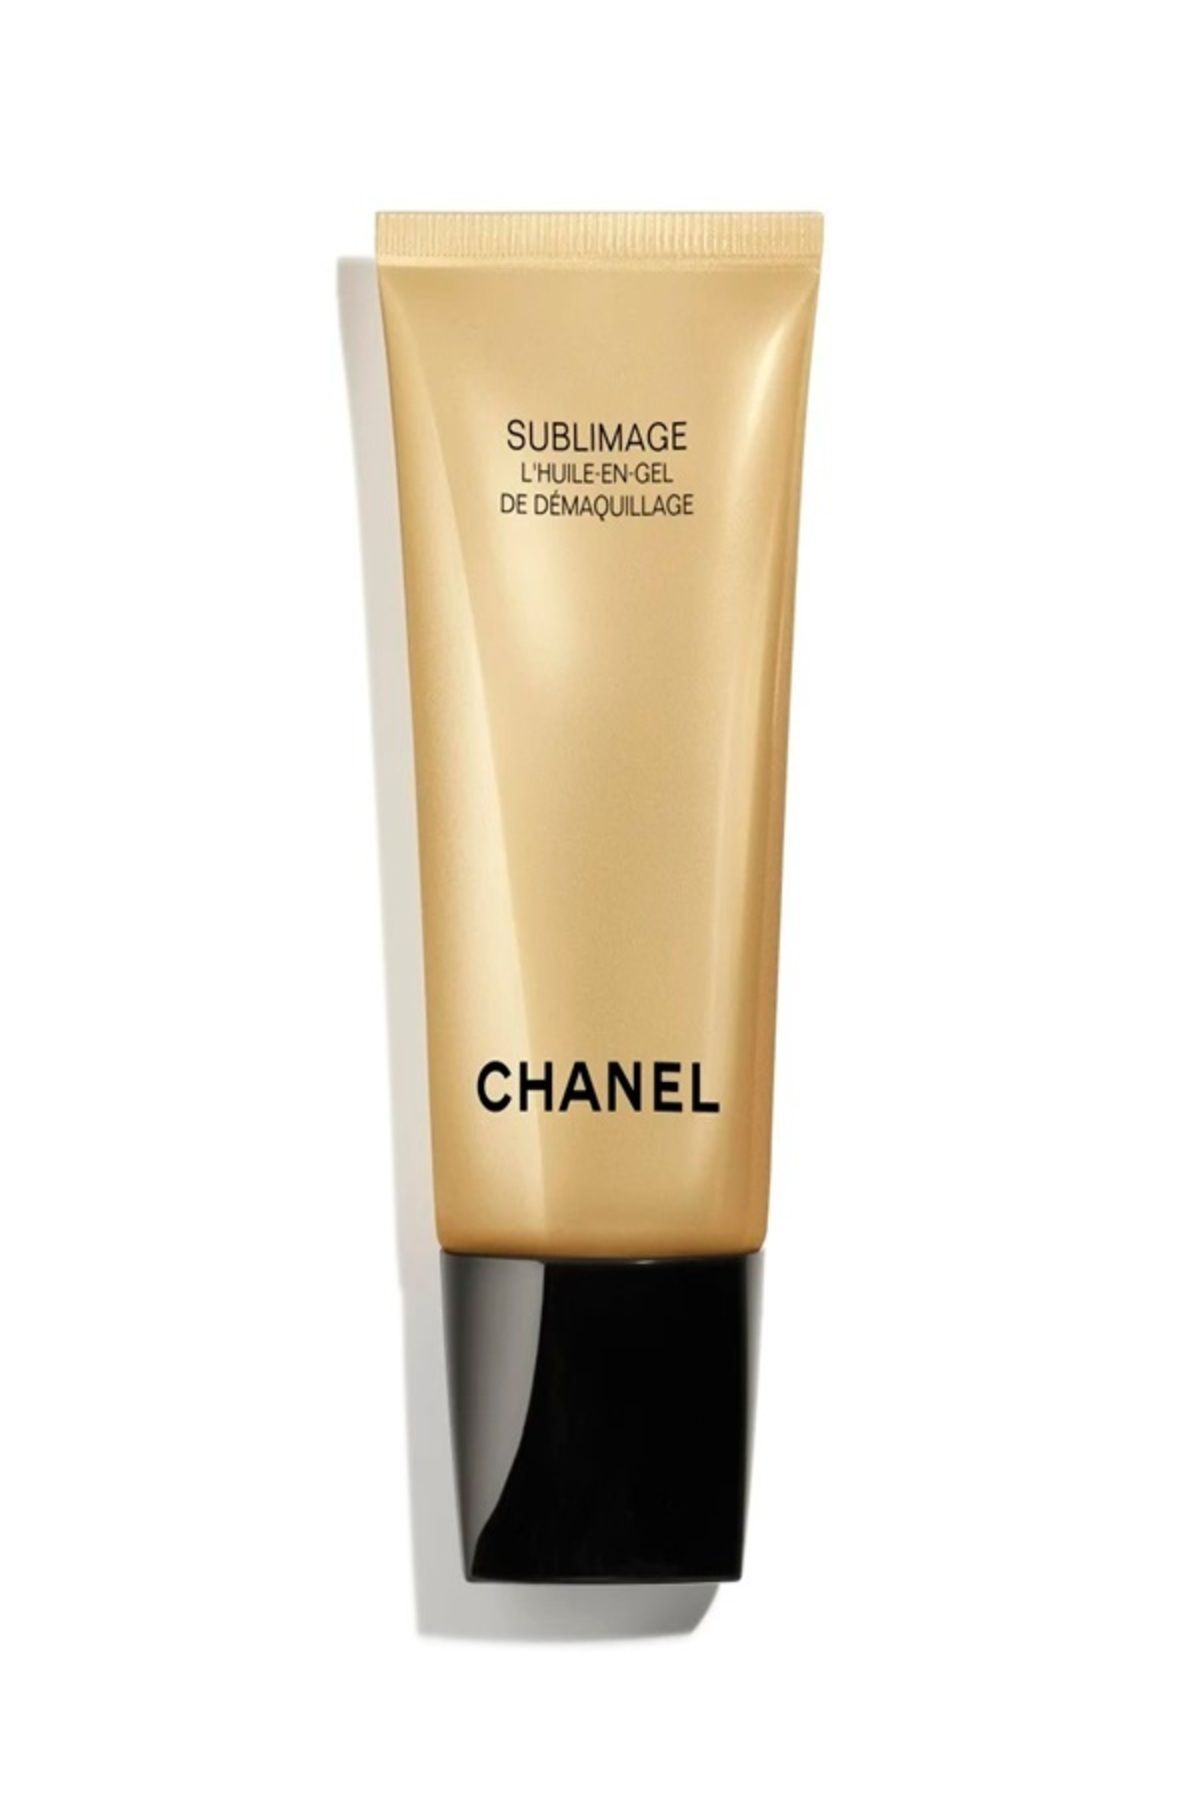 Chanel SUBLIMAGE L'HUILE-EN-GEL DE DÉMAQUILLAGE RAHATLATAN VE AYDINLIK VEREN CİLT TEMİZLEYİCİ 150 ml